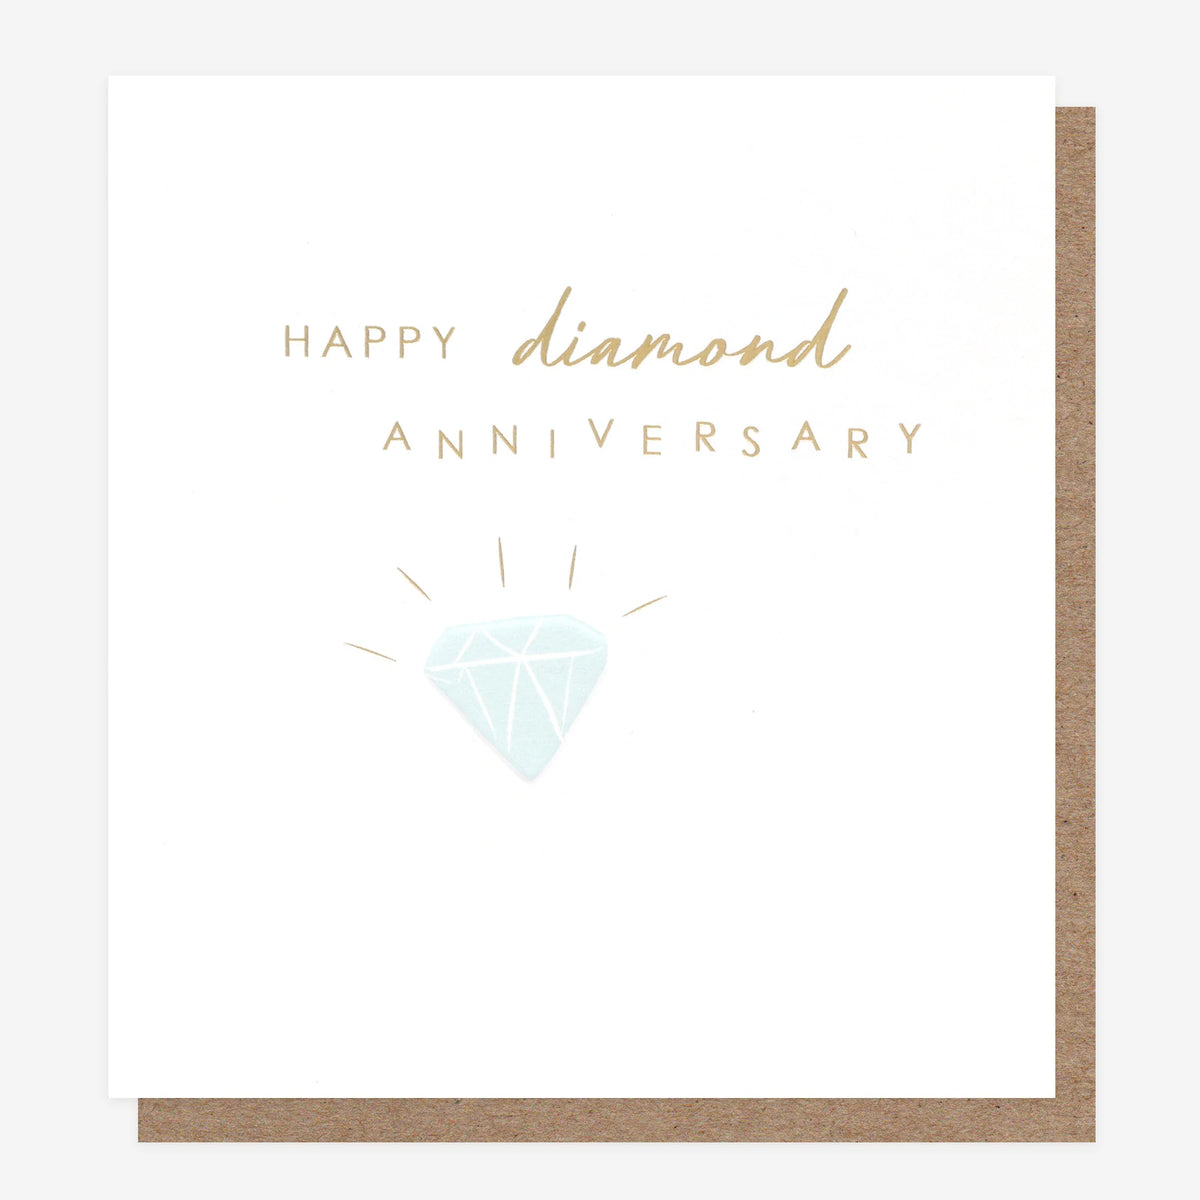 Happy Diamond Anniversary